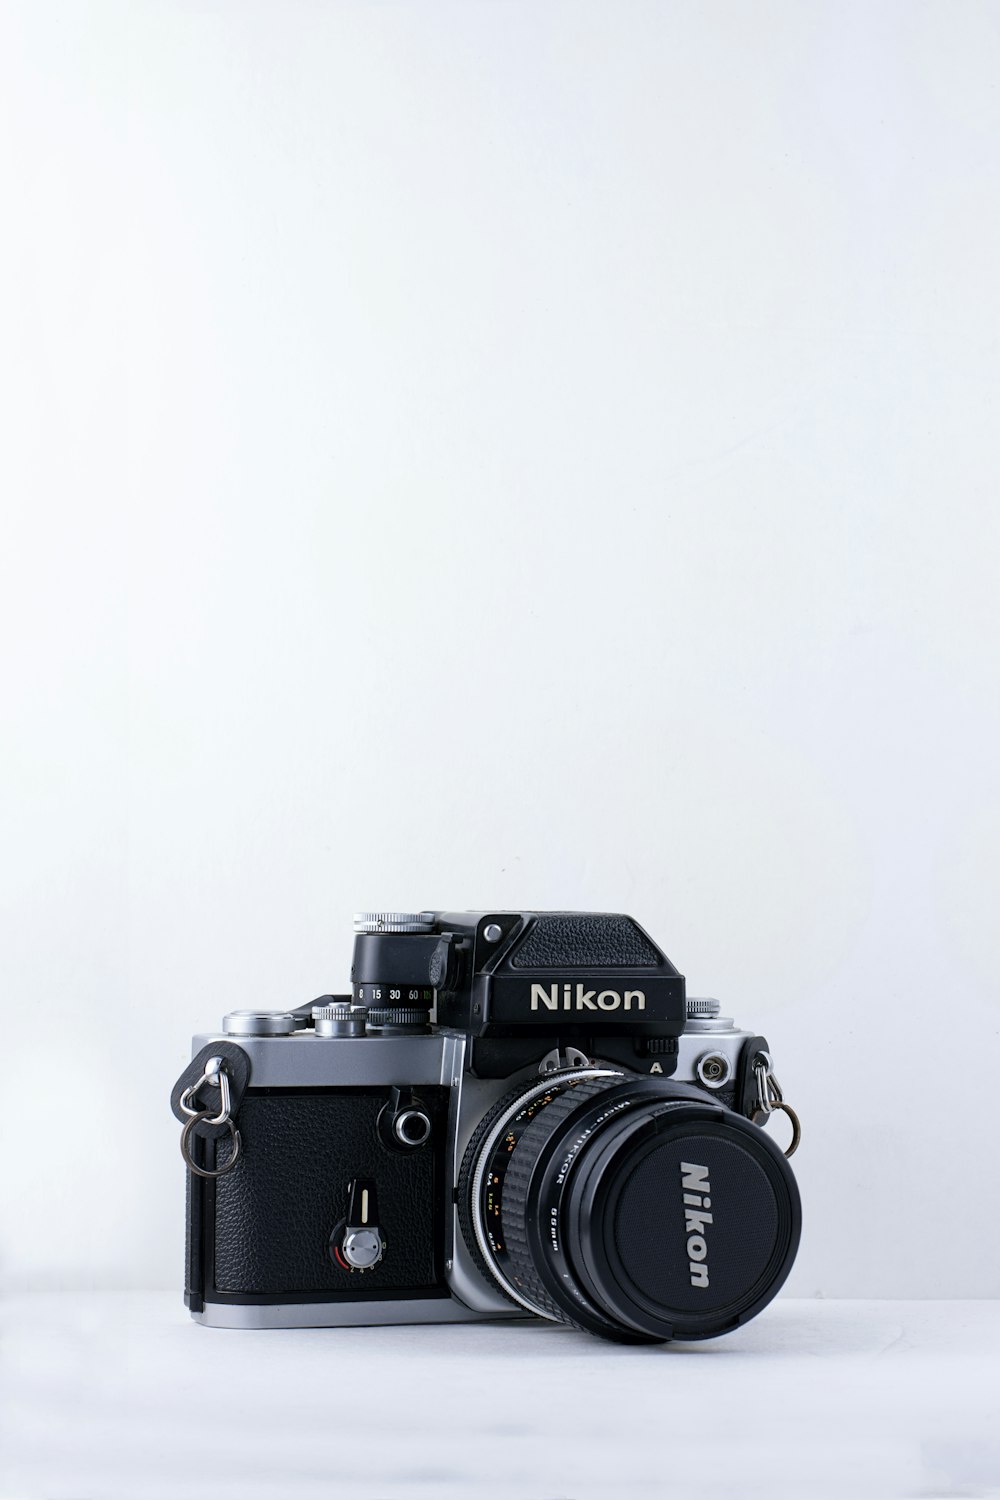 appareil photo Nikon noir sur fond blanc